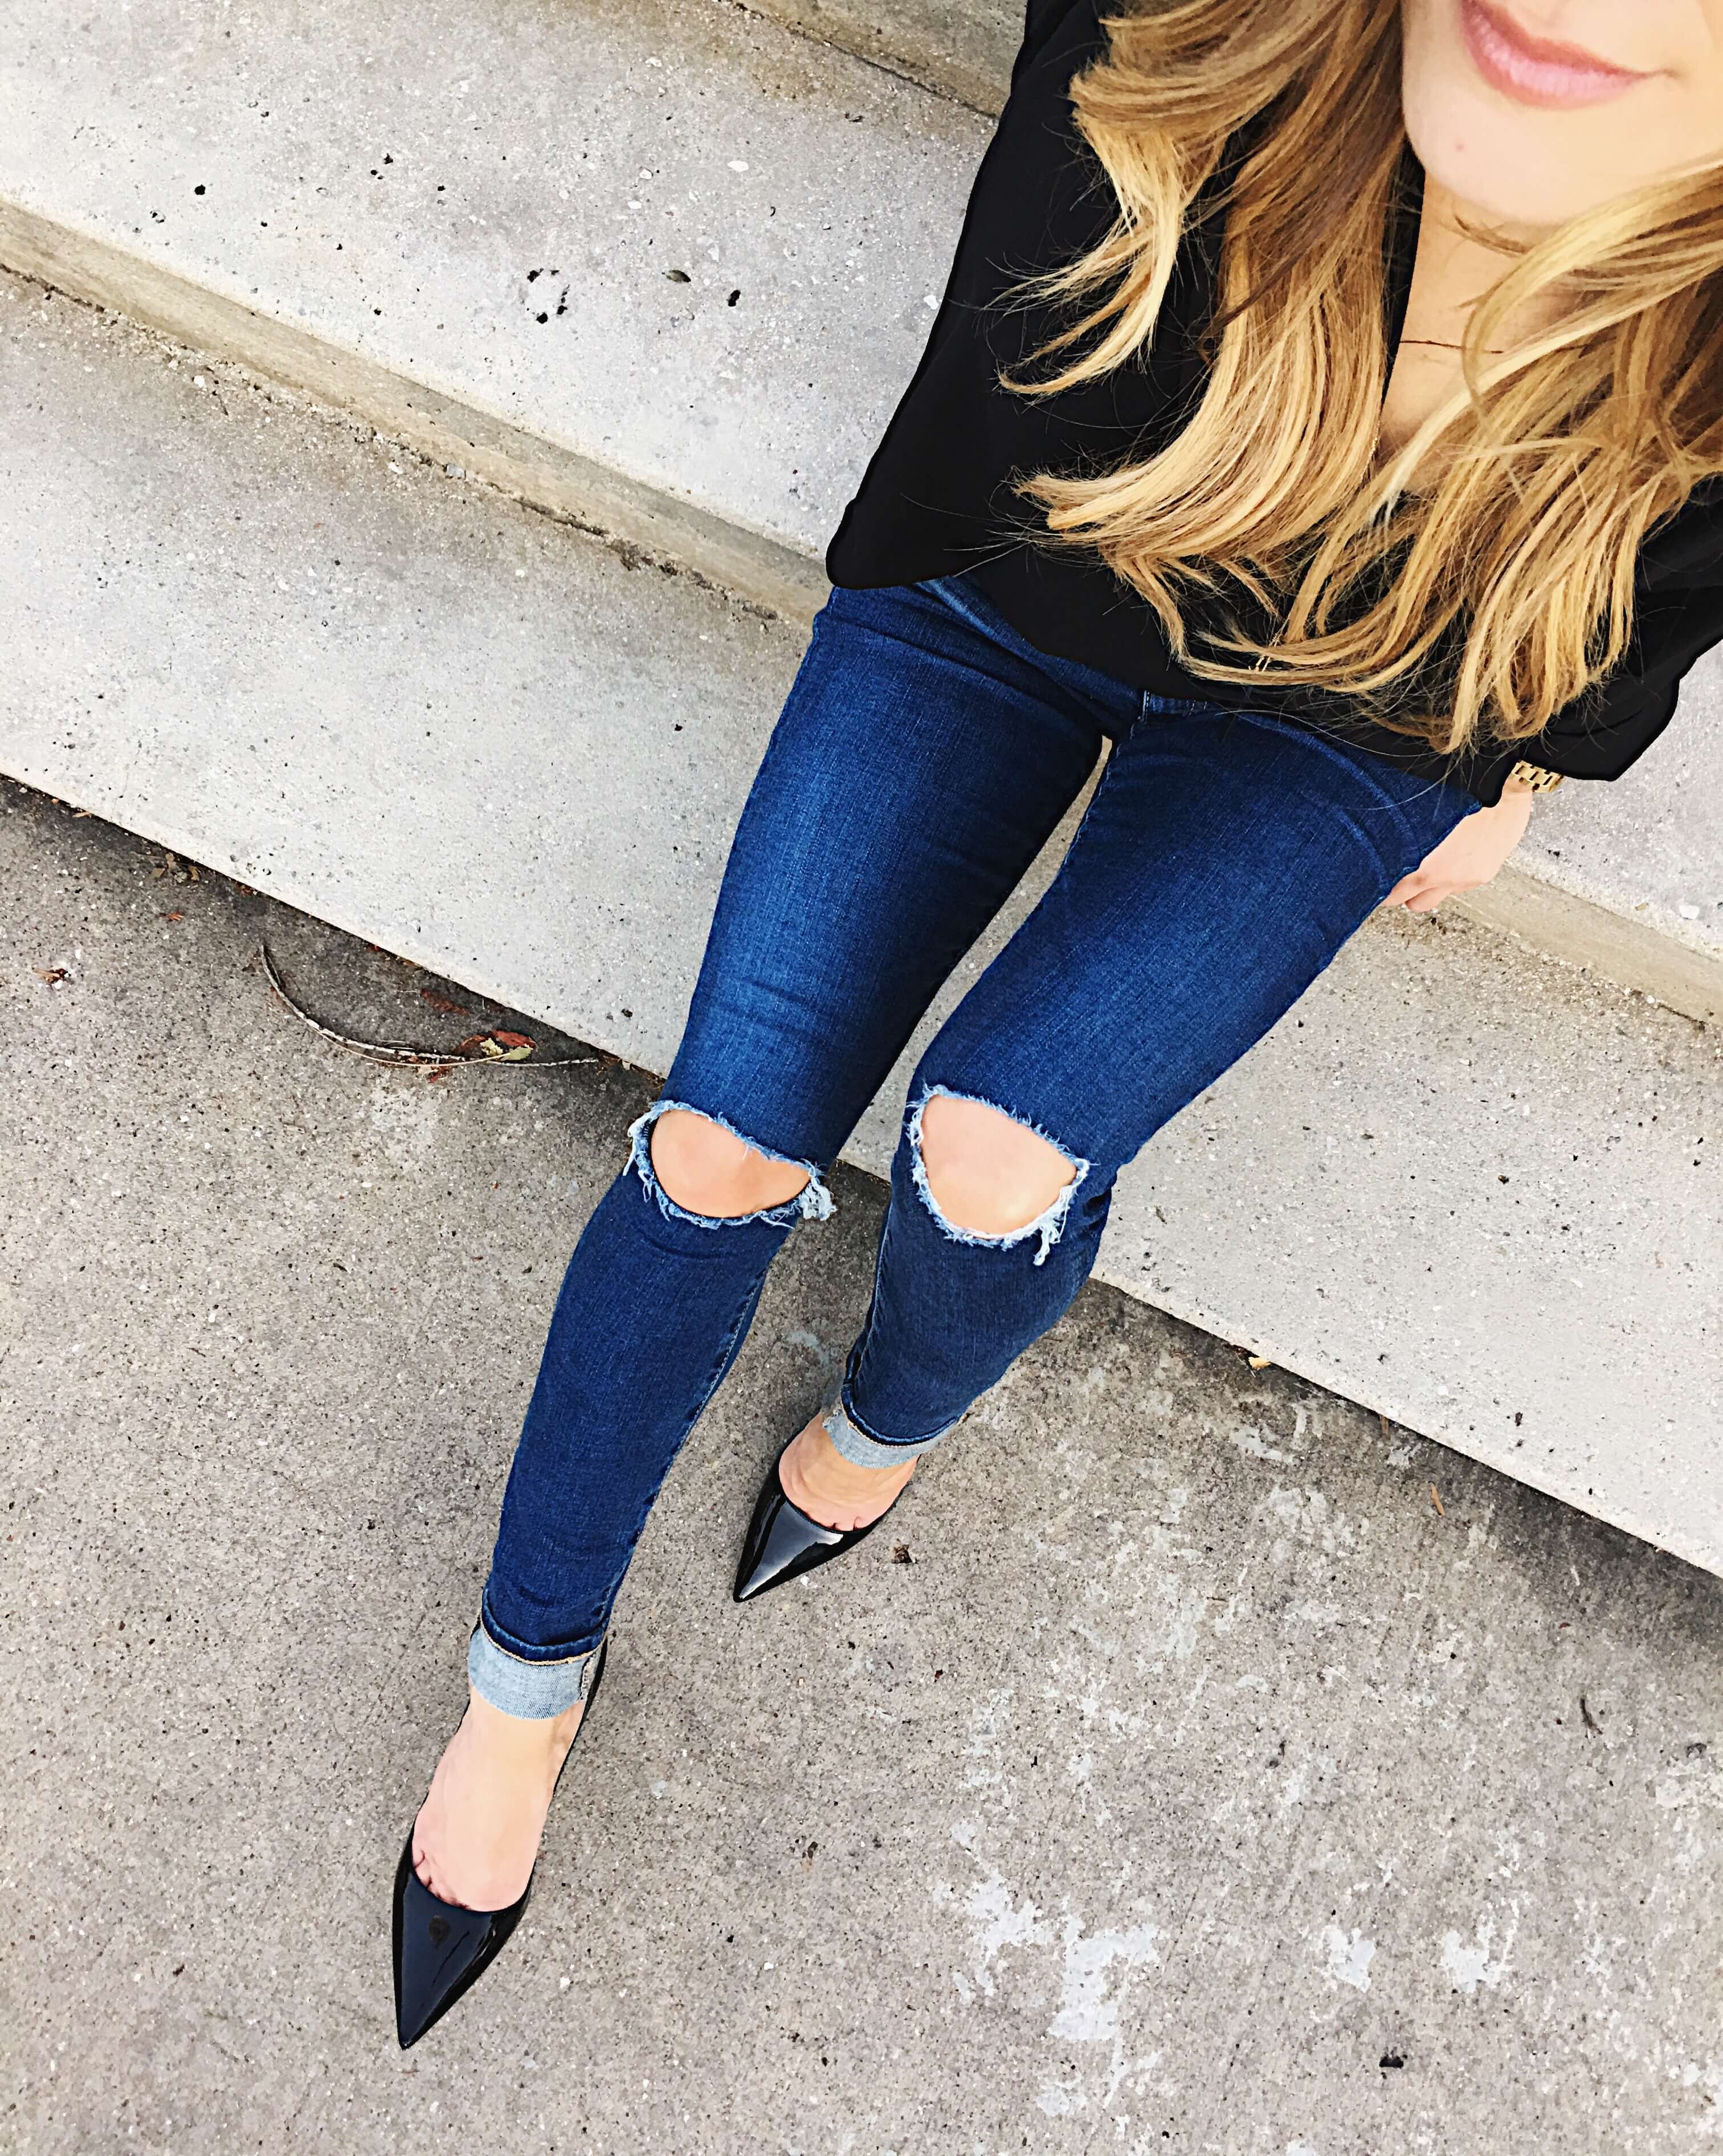 AG distressed legging jeans, prada pointed toe pump